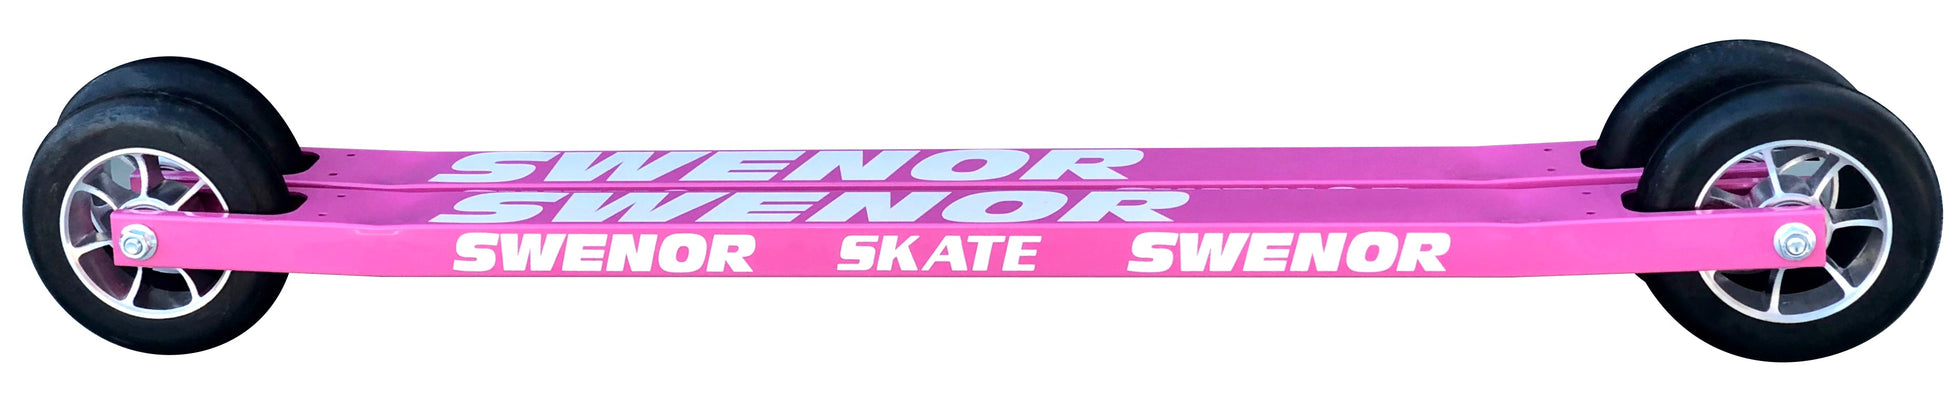 The most popular skate rollerski.